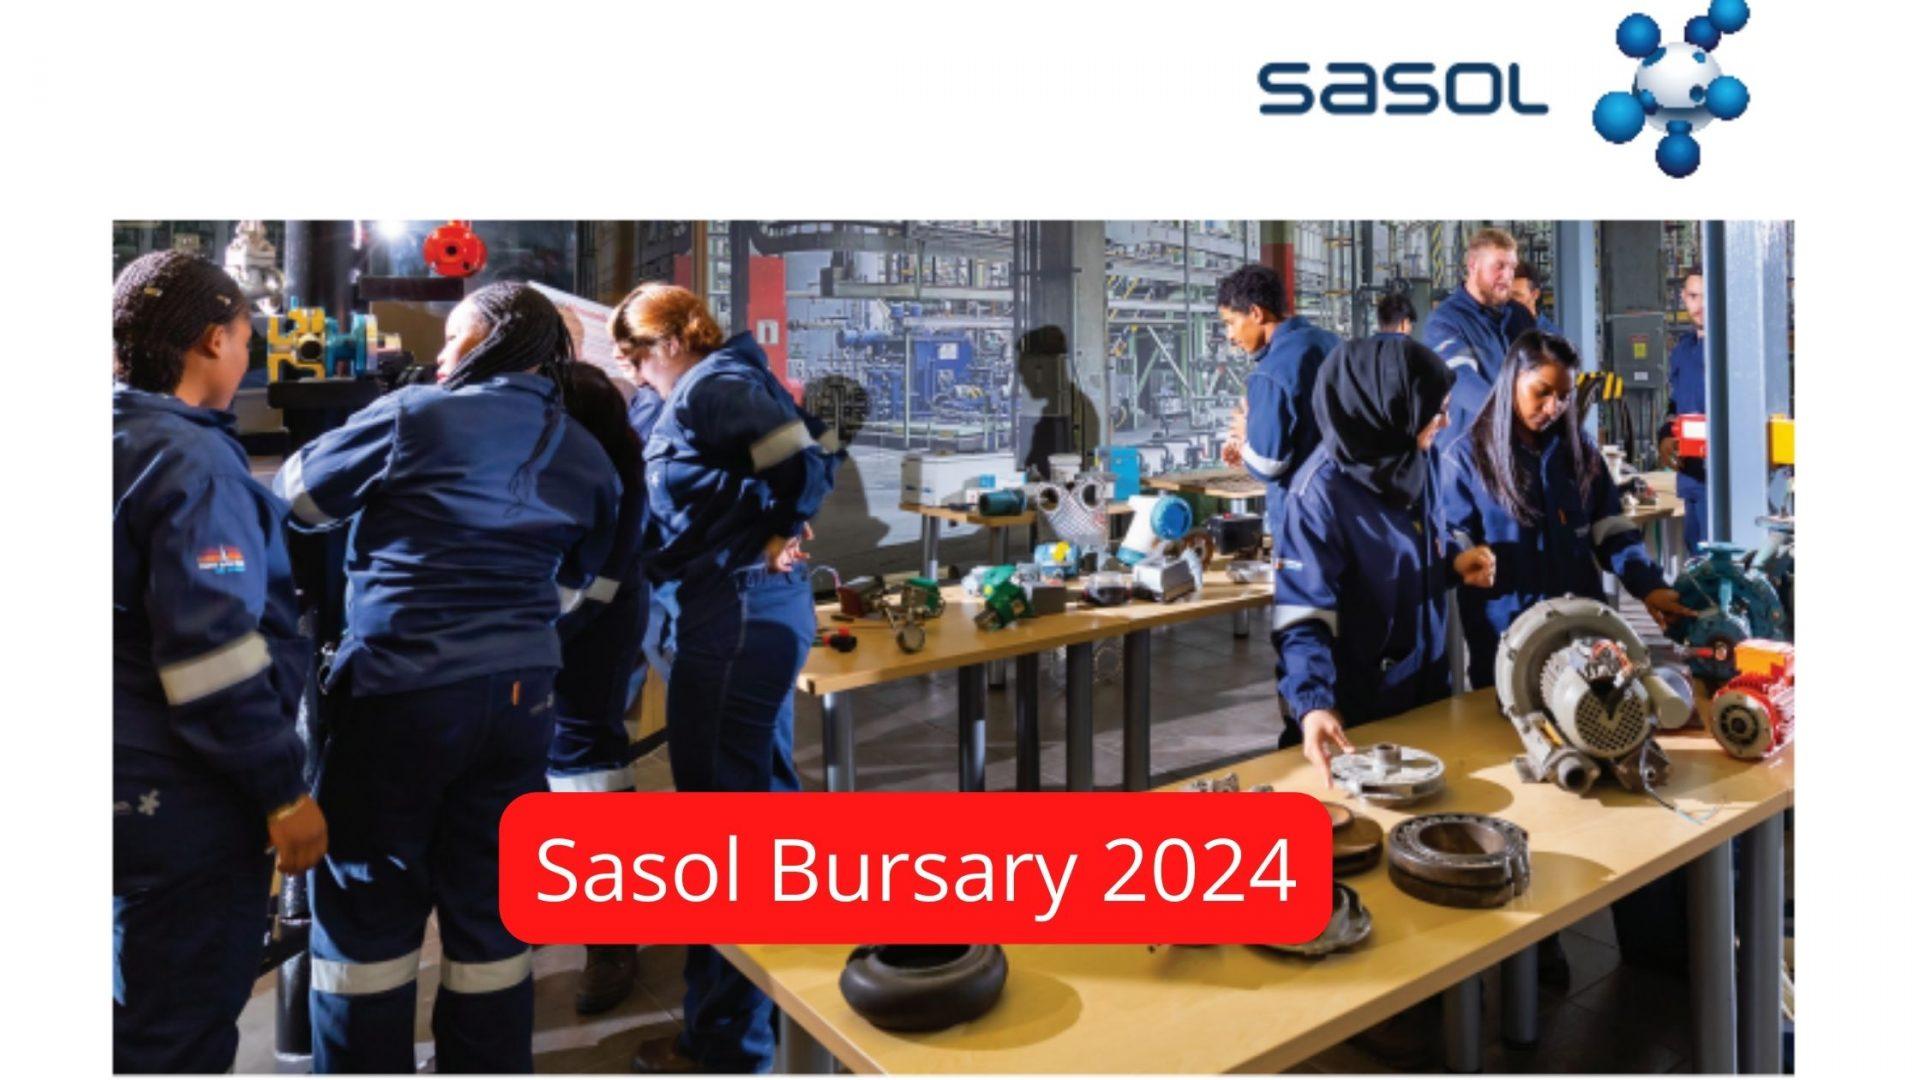 SASOL Bursary 2025 application